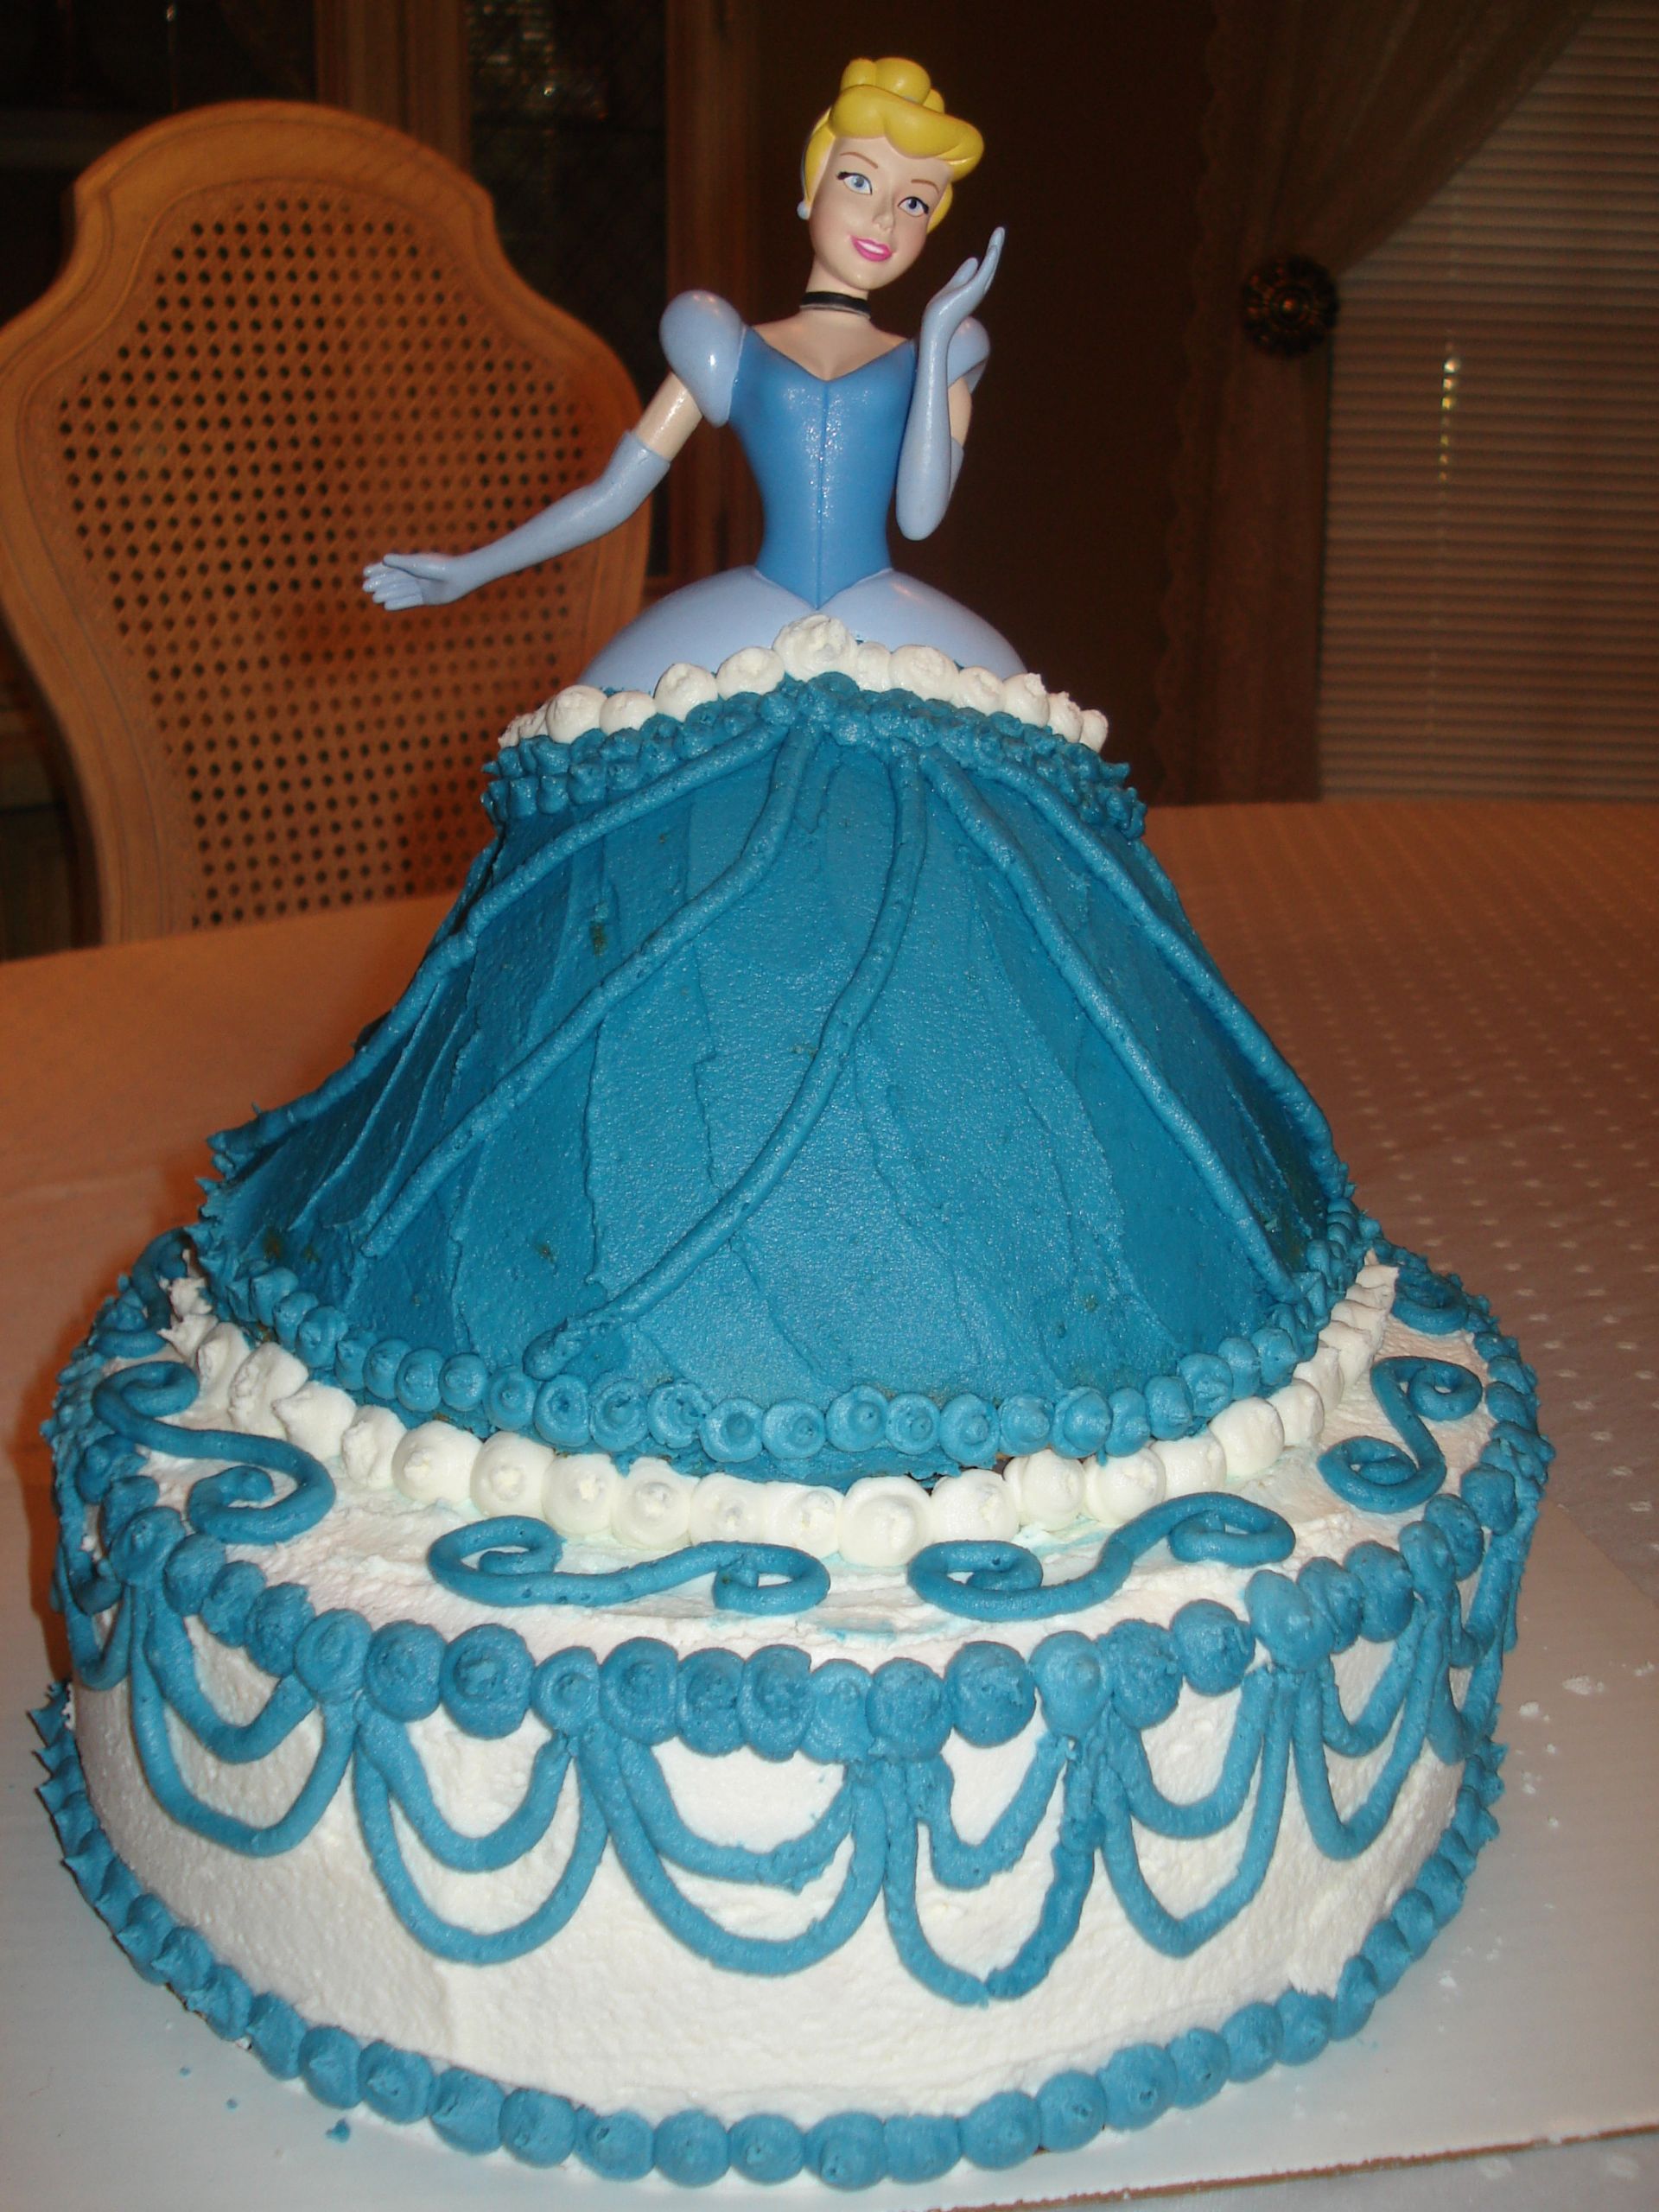 Cinderella Birthday Cake
 Houston Baker Makes Peanut Nut Free Cinderella Birthday